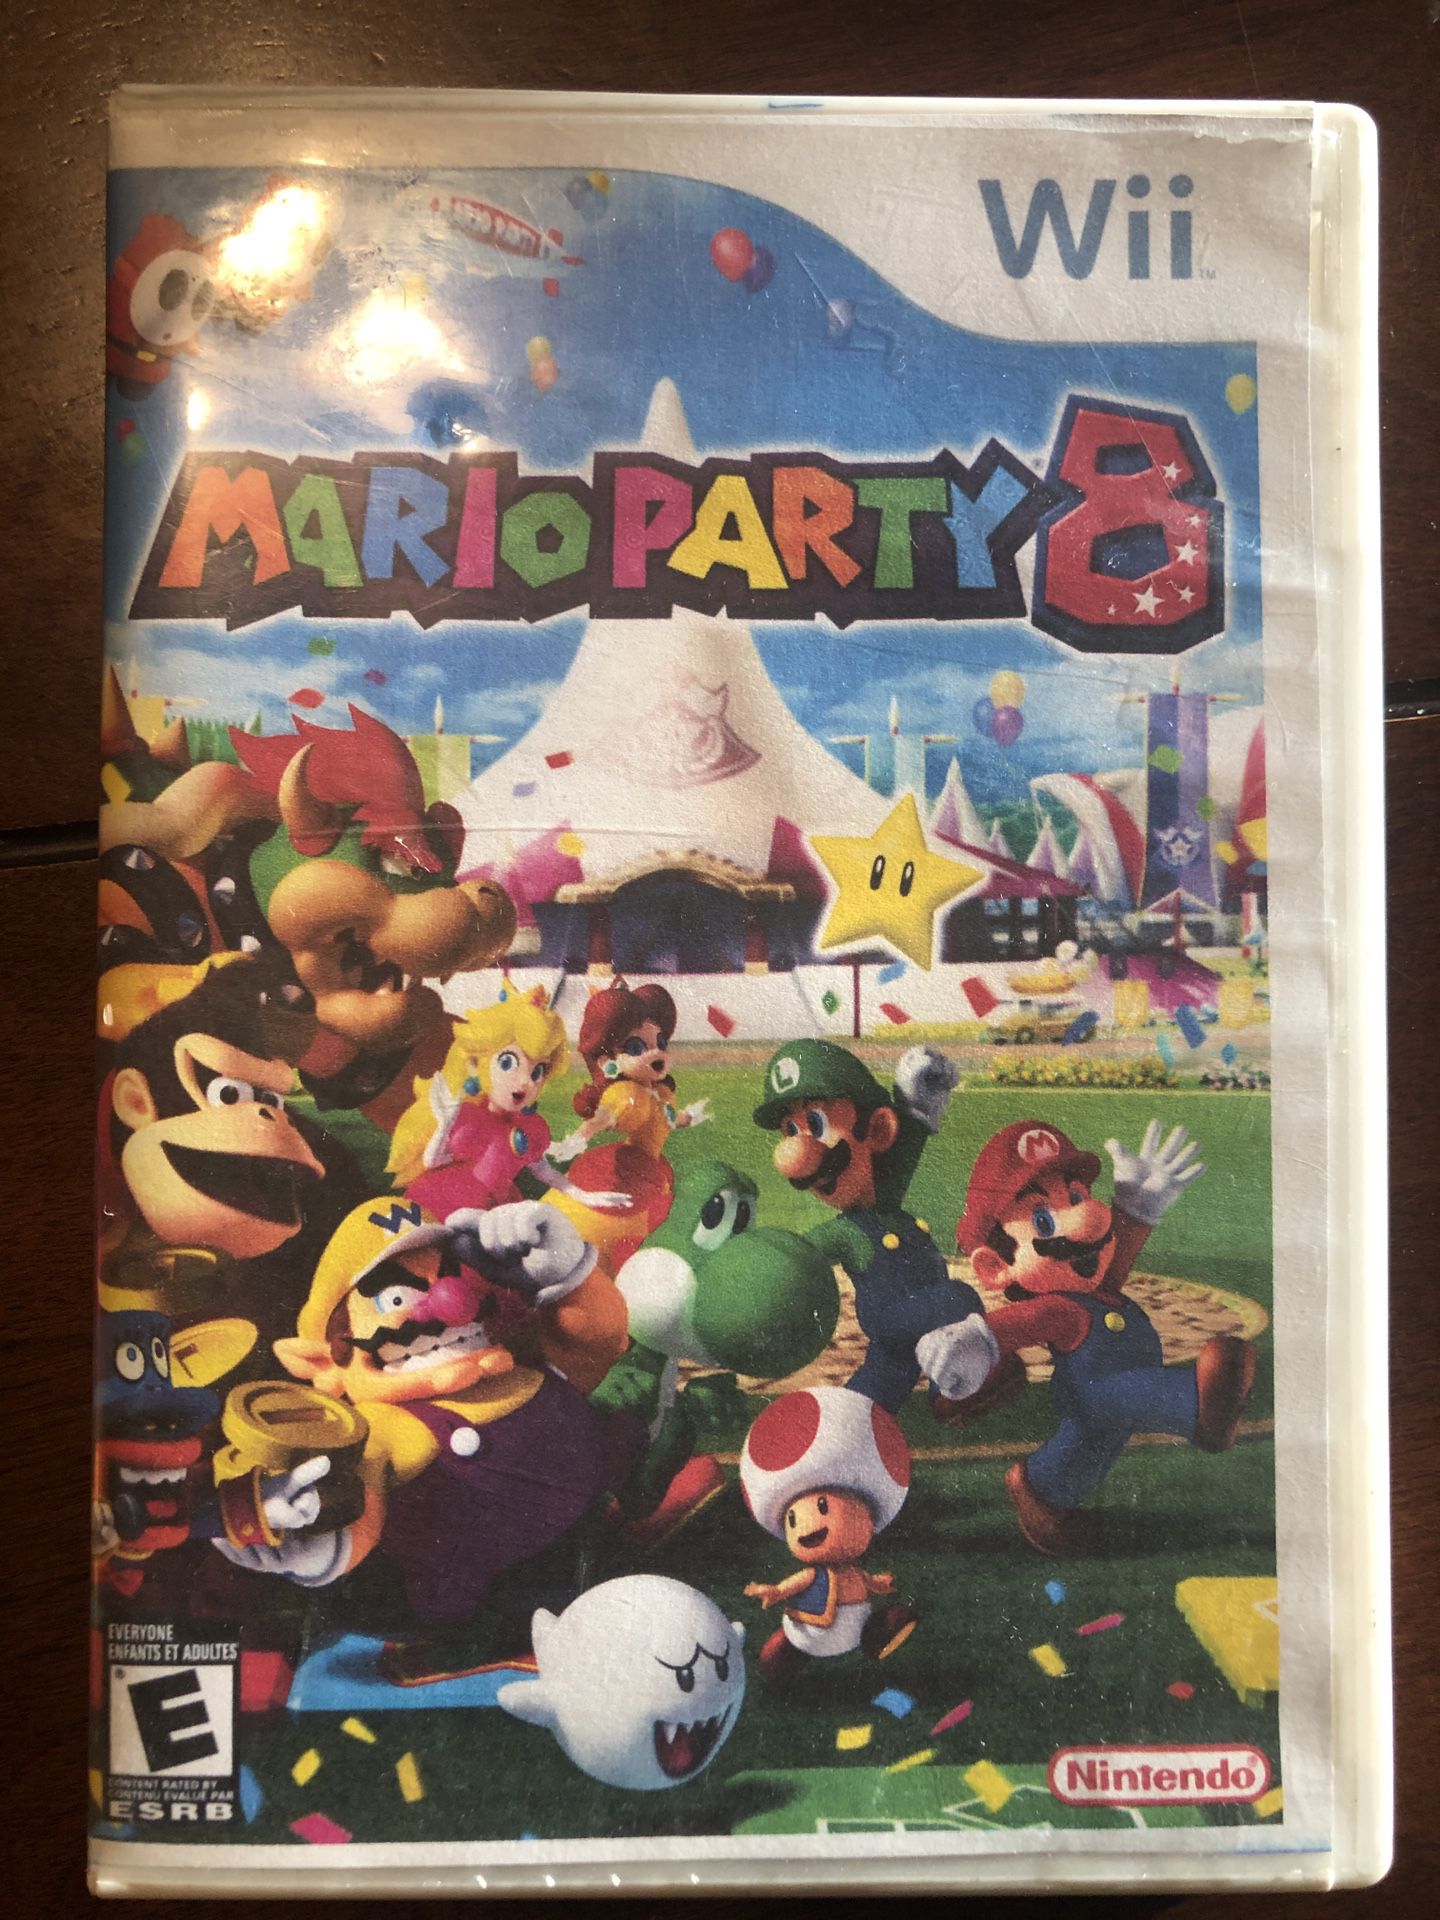 Mario Party 8 for Nintendo Wii